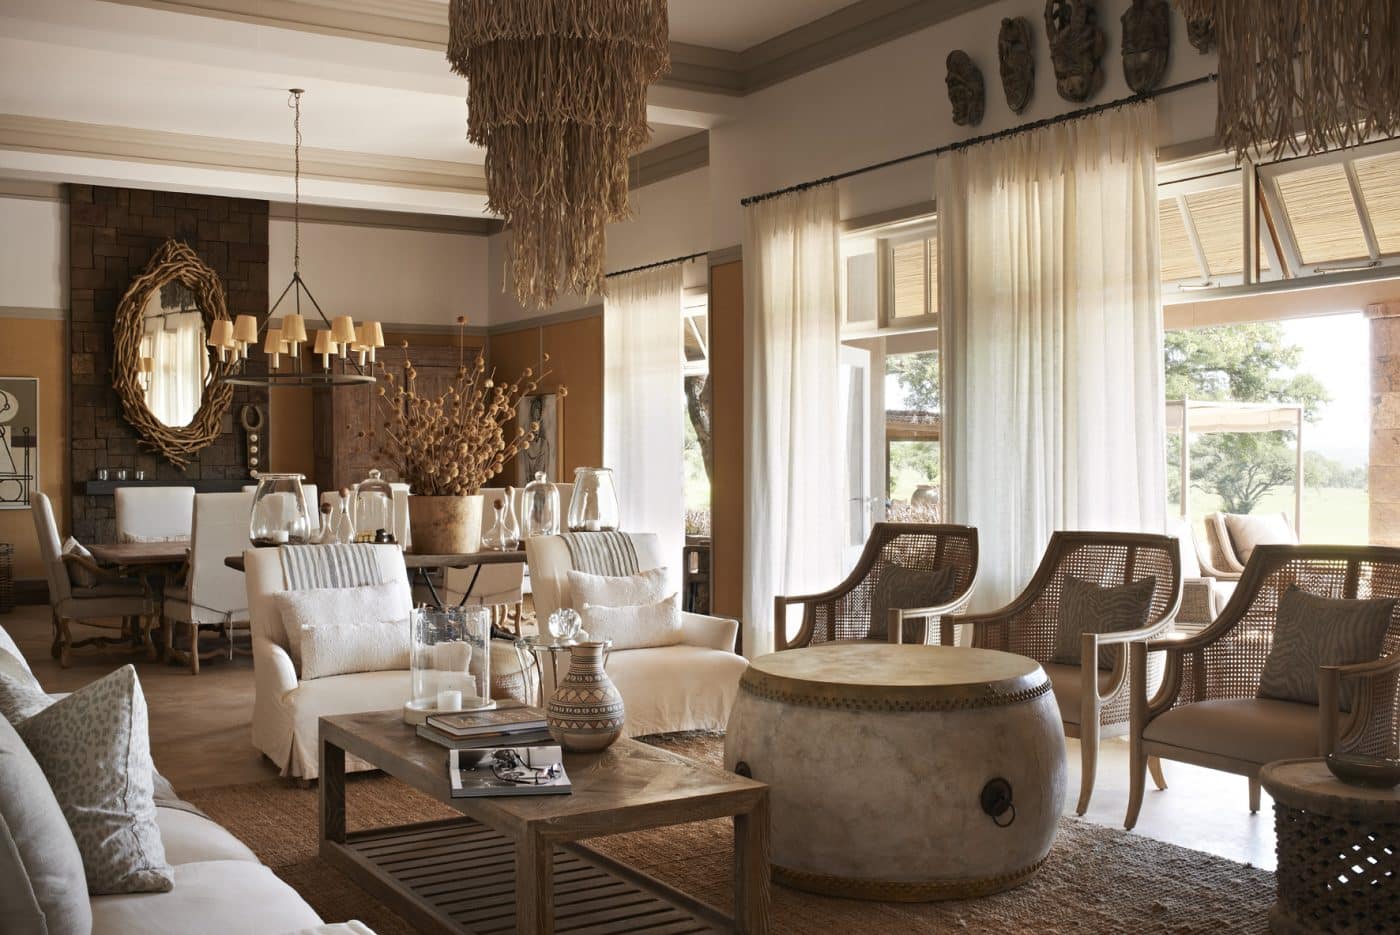 Lounge of the four-bedroom Serengeti House villa at Tanzania's Singita Grumeti safari lodge, designed by Boyd Ferguson